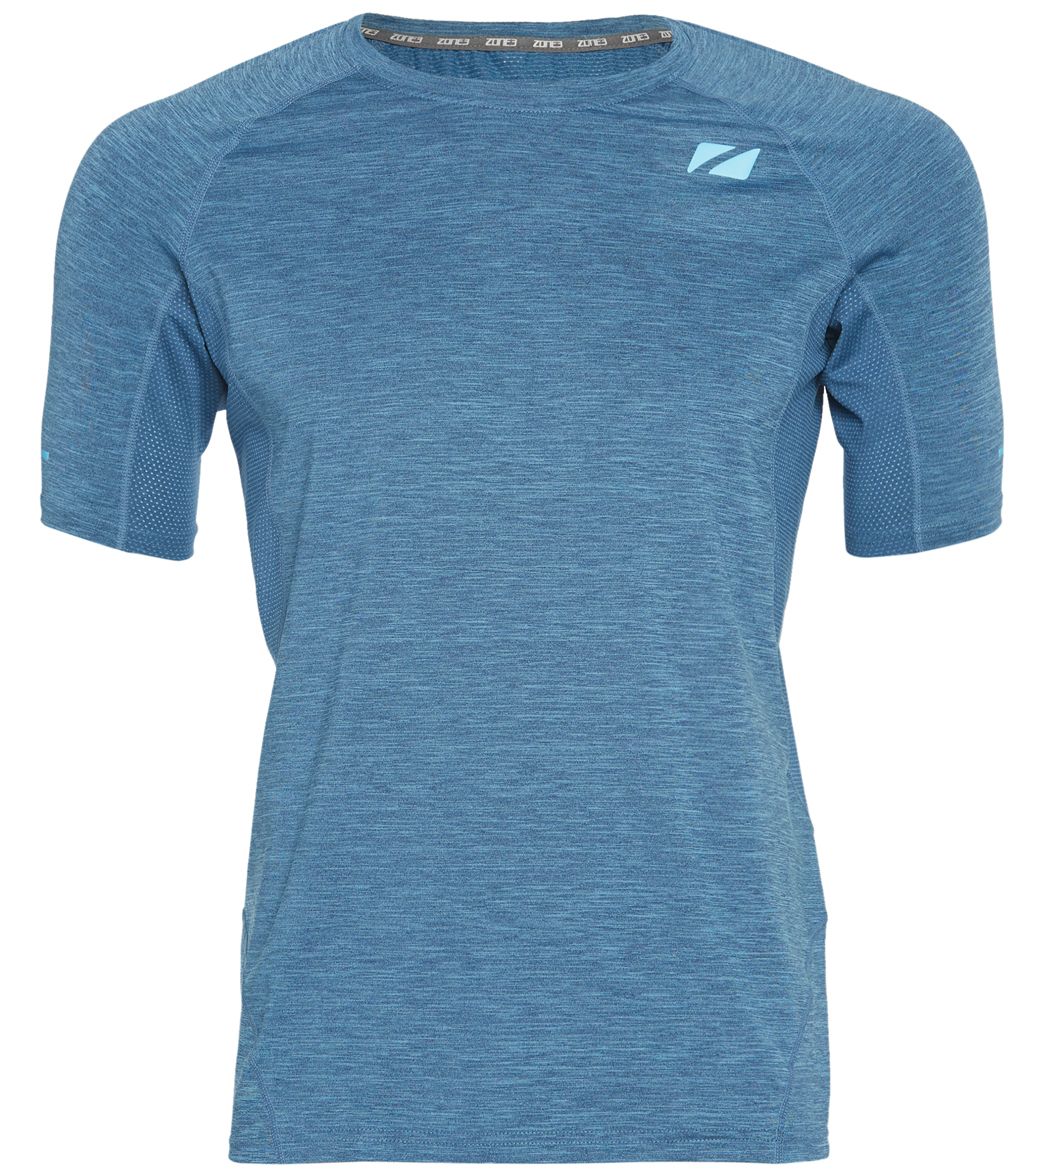 Zone3 Men's Compression Power Burst Short Sleeve Shirt - Royal Blue/Sky Blue Medium - Swimoutlet.com